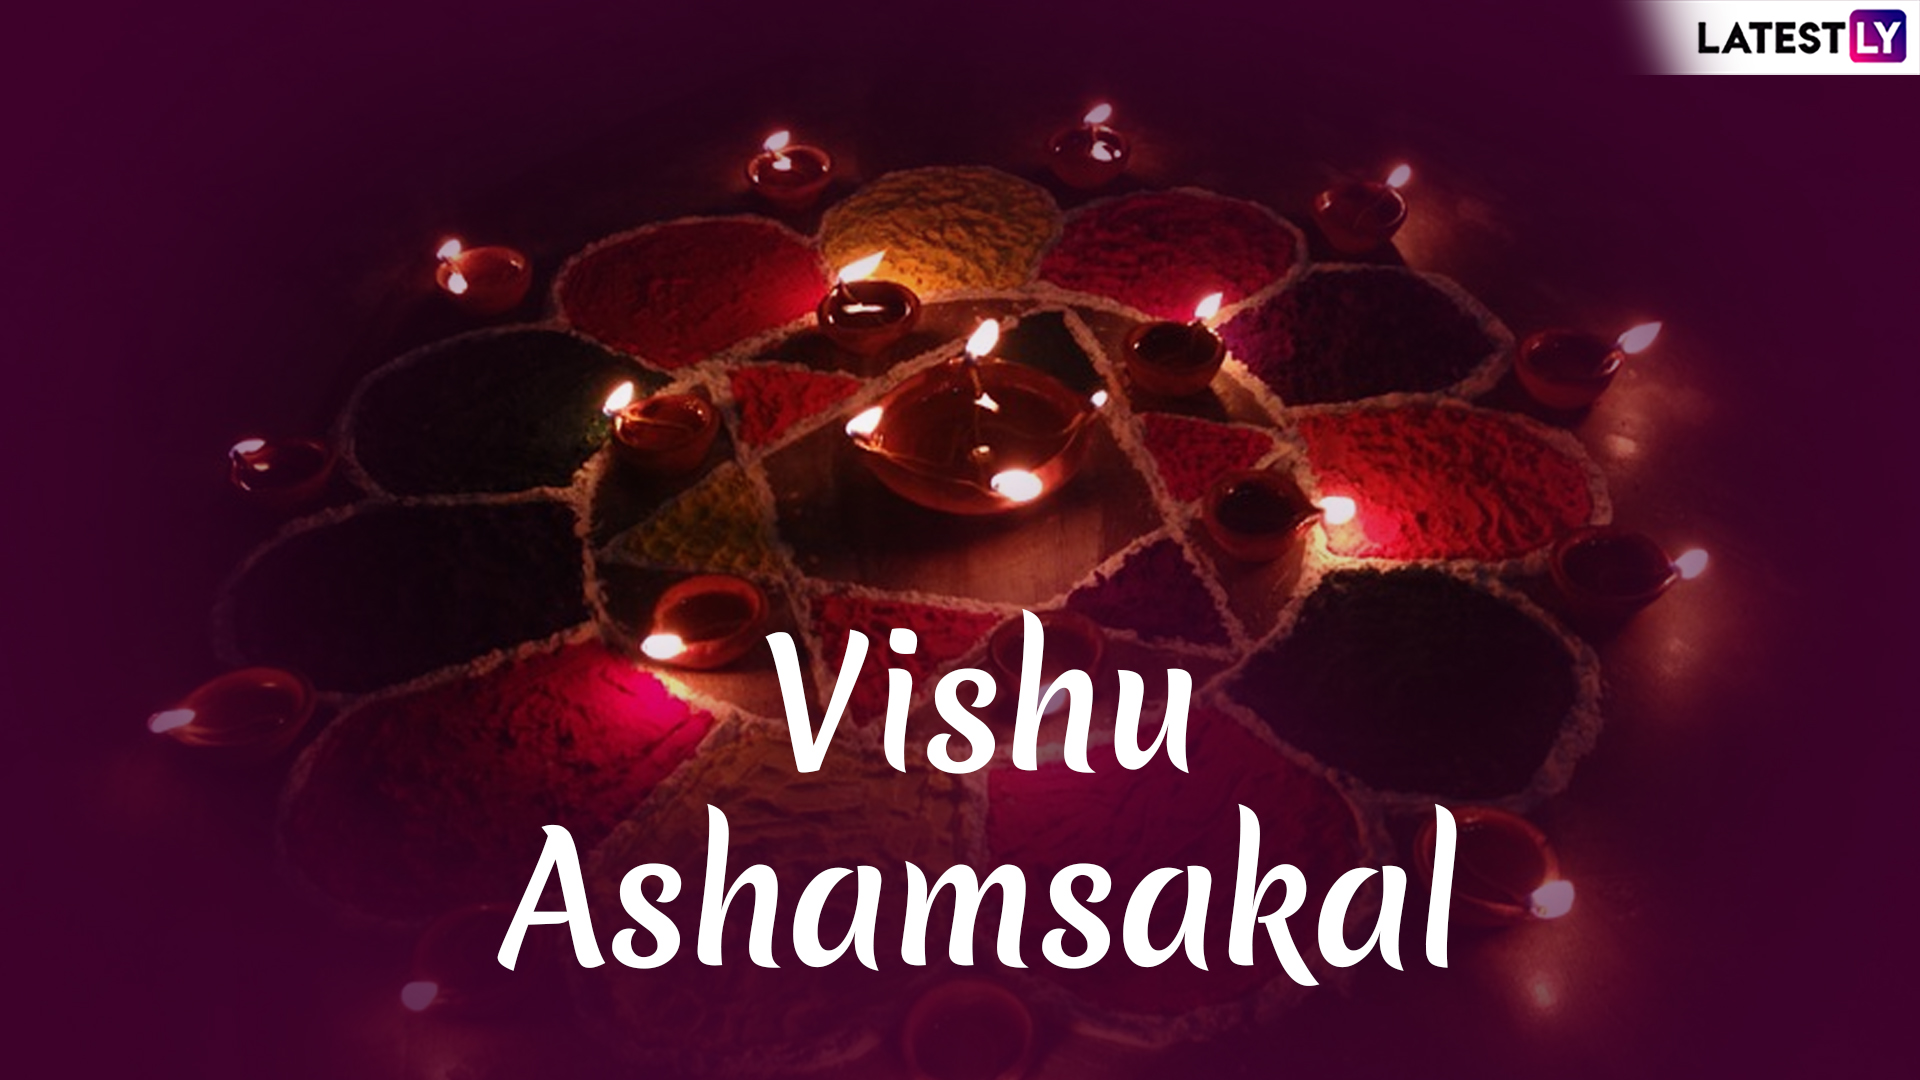 Vishu Ashamsakal Hd Images Vishu 2020 Wishes In Malayalam Images, Photos, Reviews